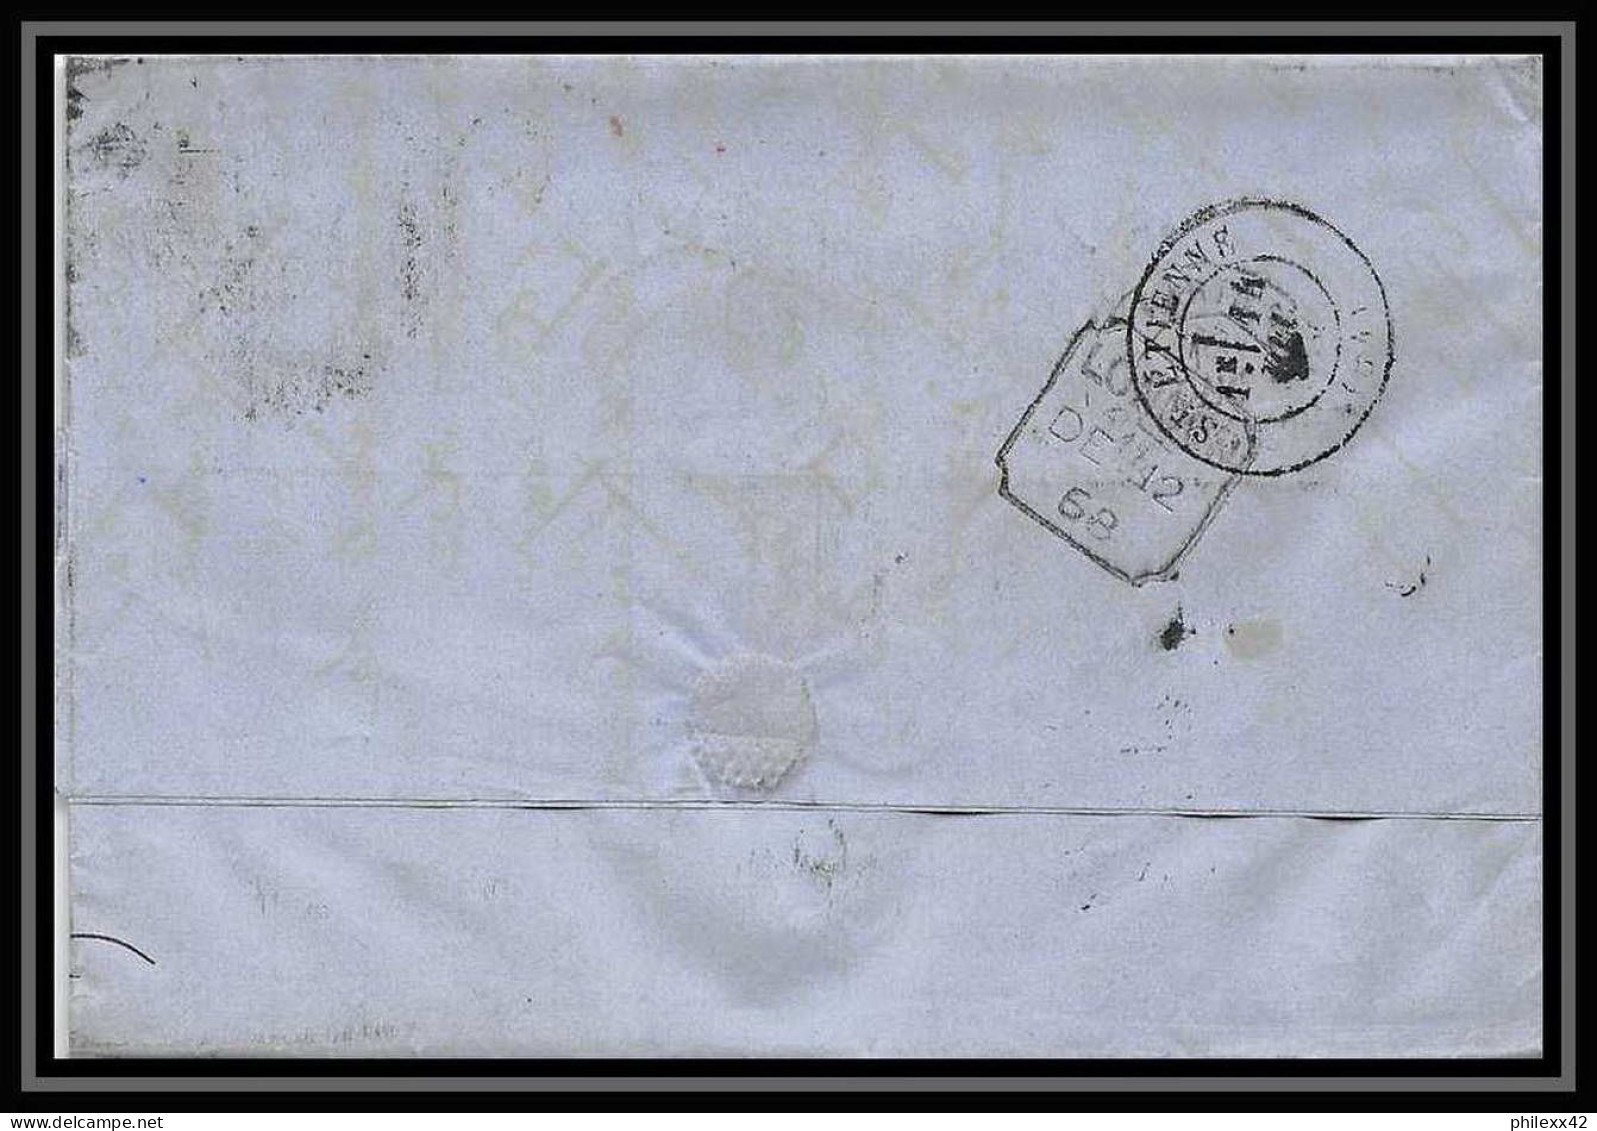 35667 N°32 Victoria 4p Red London St Etienne France 1868 Cachet 48 Lettre Cover Grande Bretagne England - Cartas & Documentos